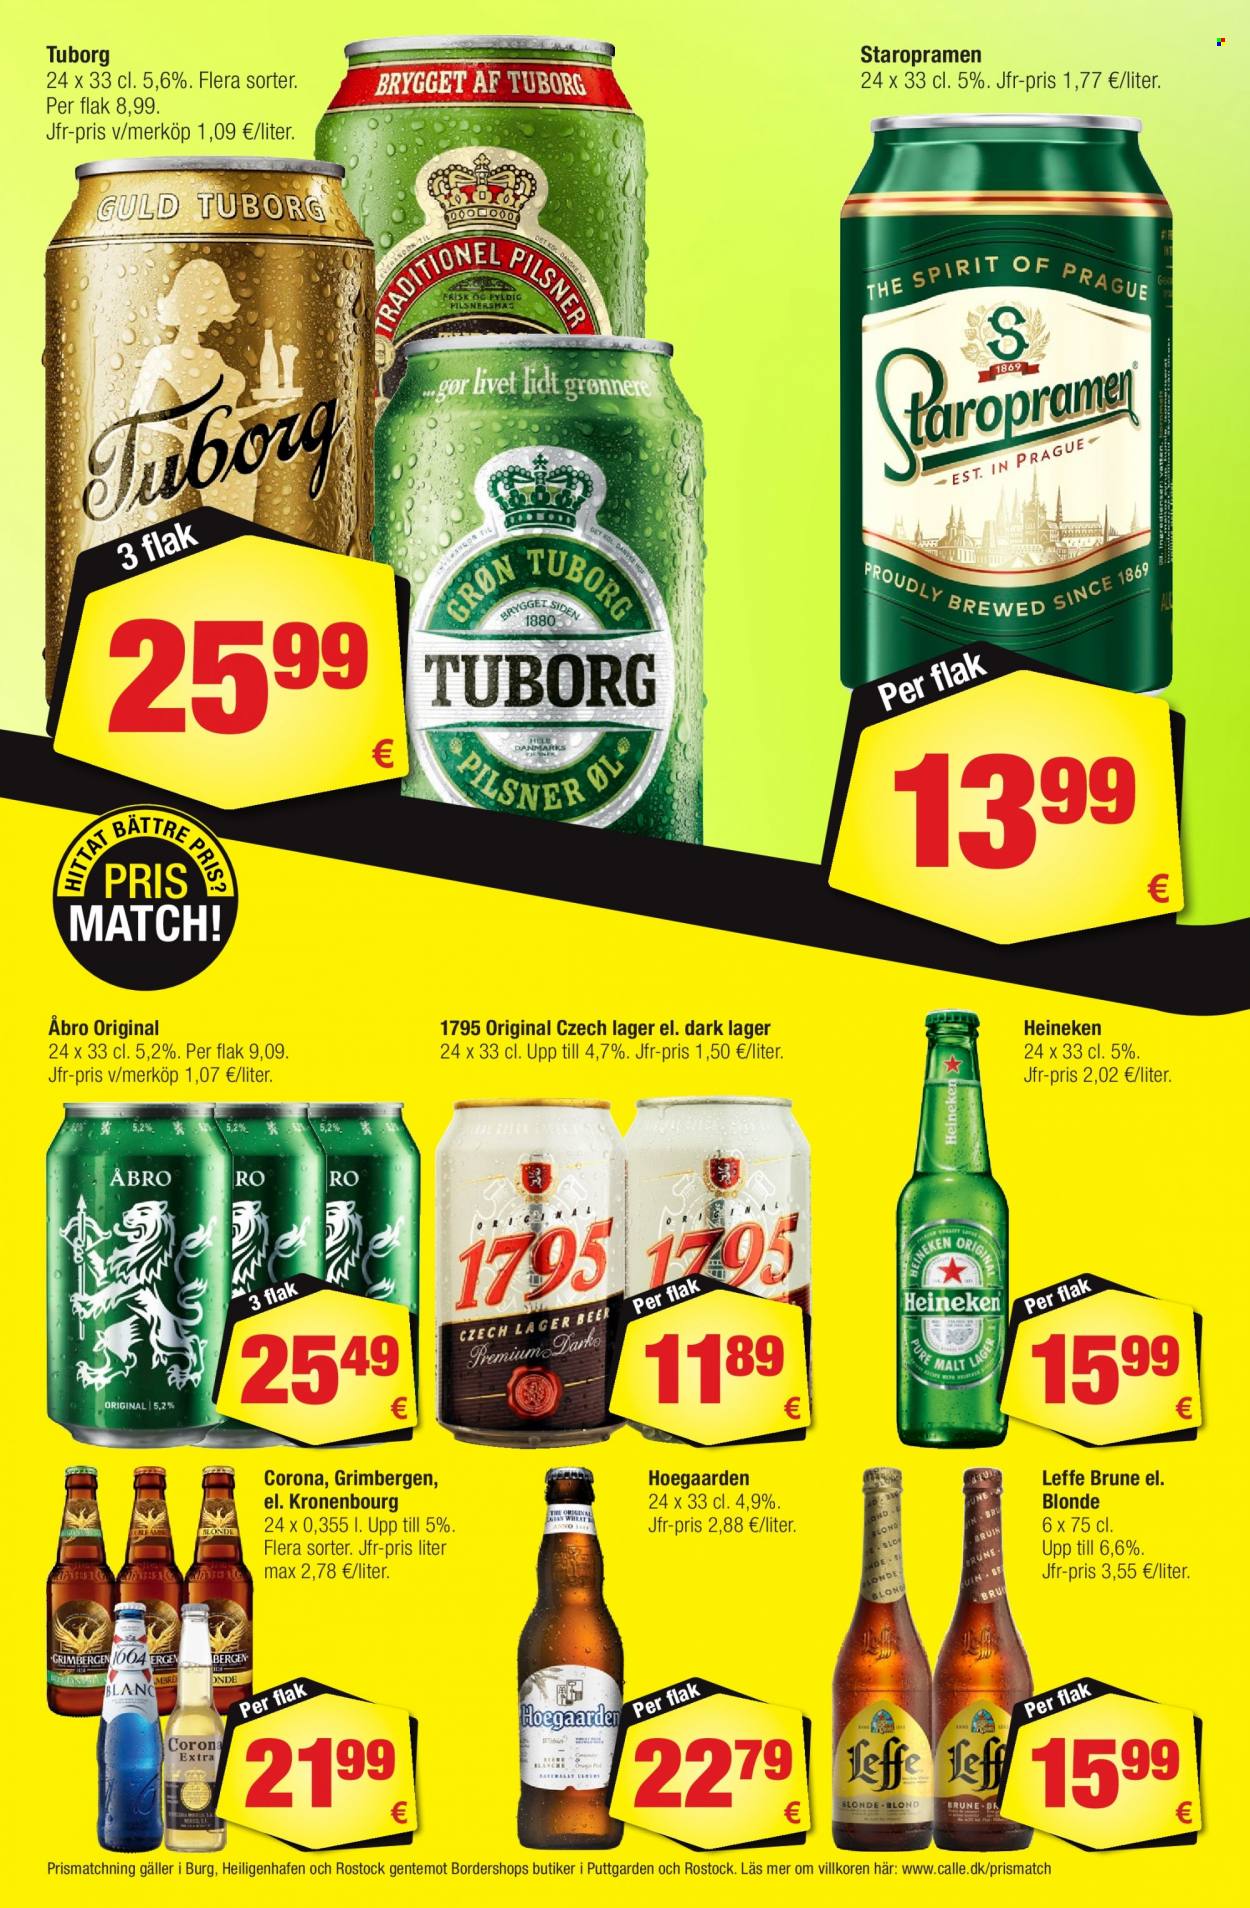 Calle tilbud  - 09.11.2022 - 03.01.2023 - tilbudsprodukter - 1795 Original Czech Lager, Heineken, Leffe, Tuborg, øl, Grimbergen. Side 6.